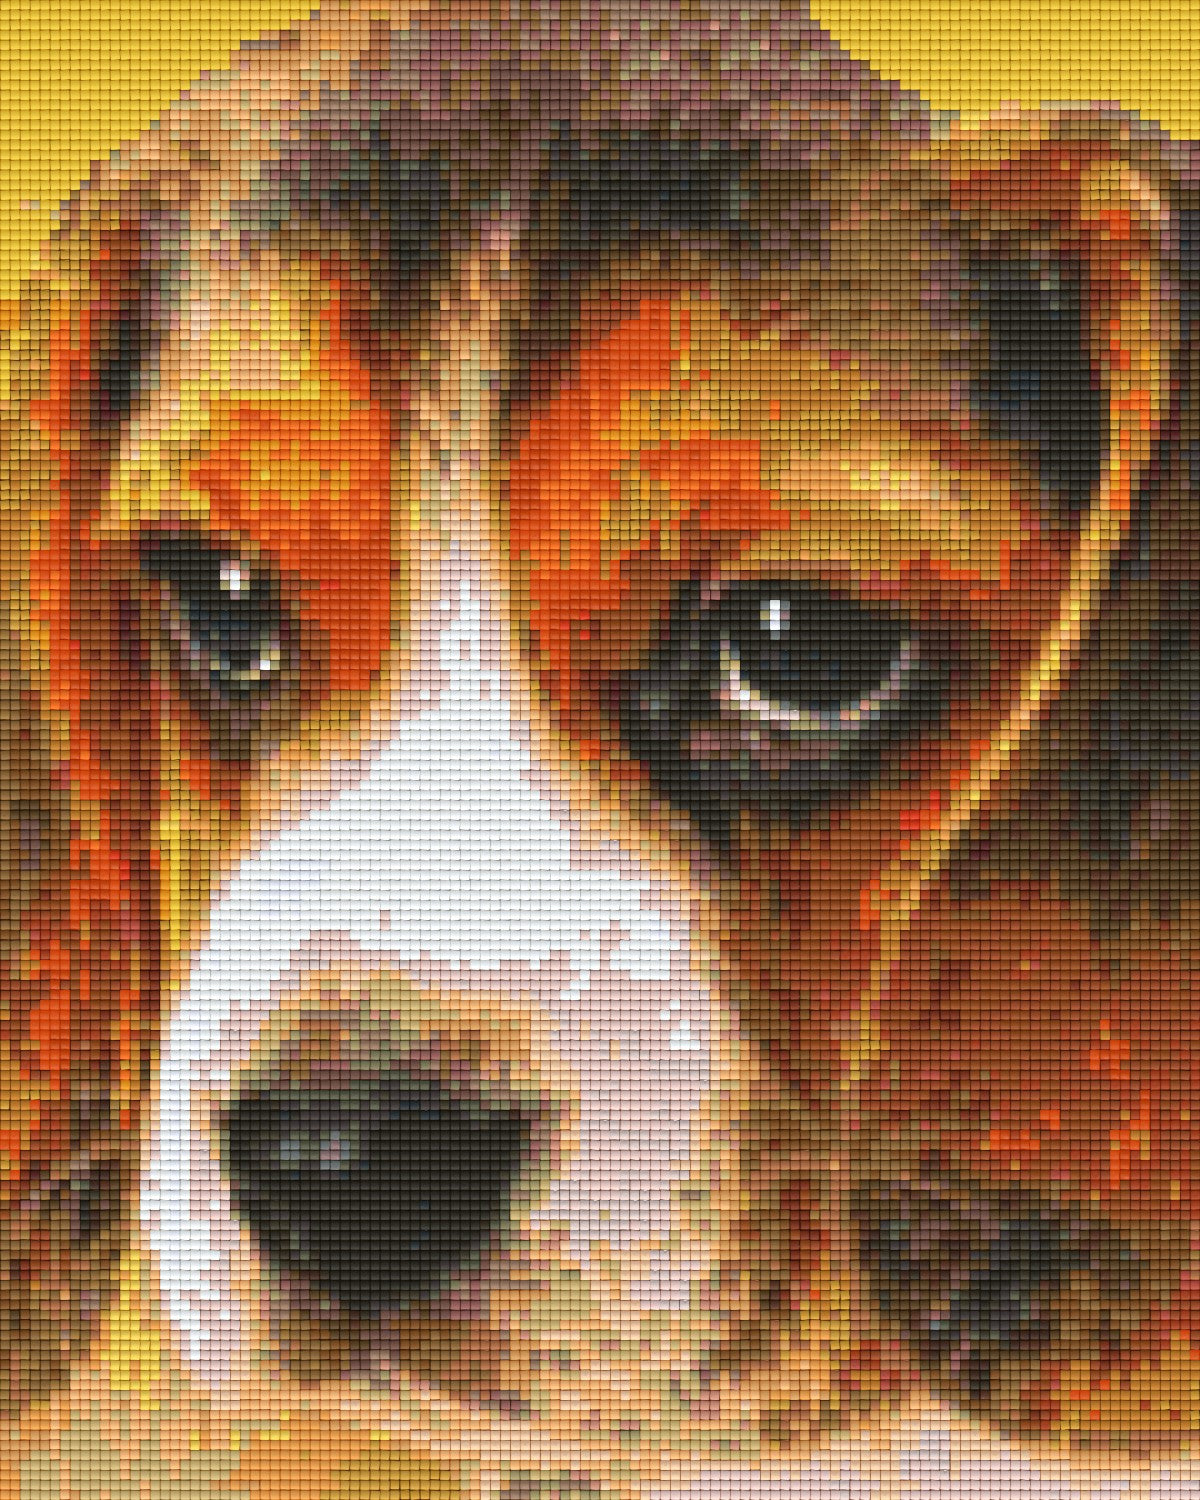 Pixel hobby classic set - dog